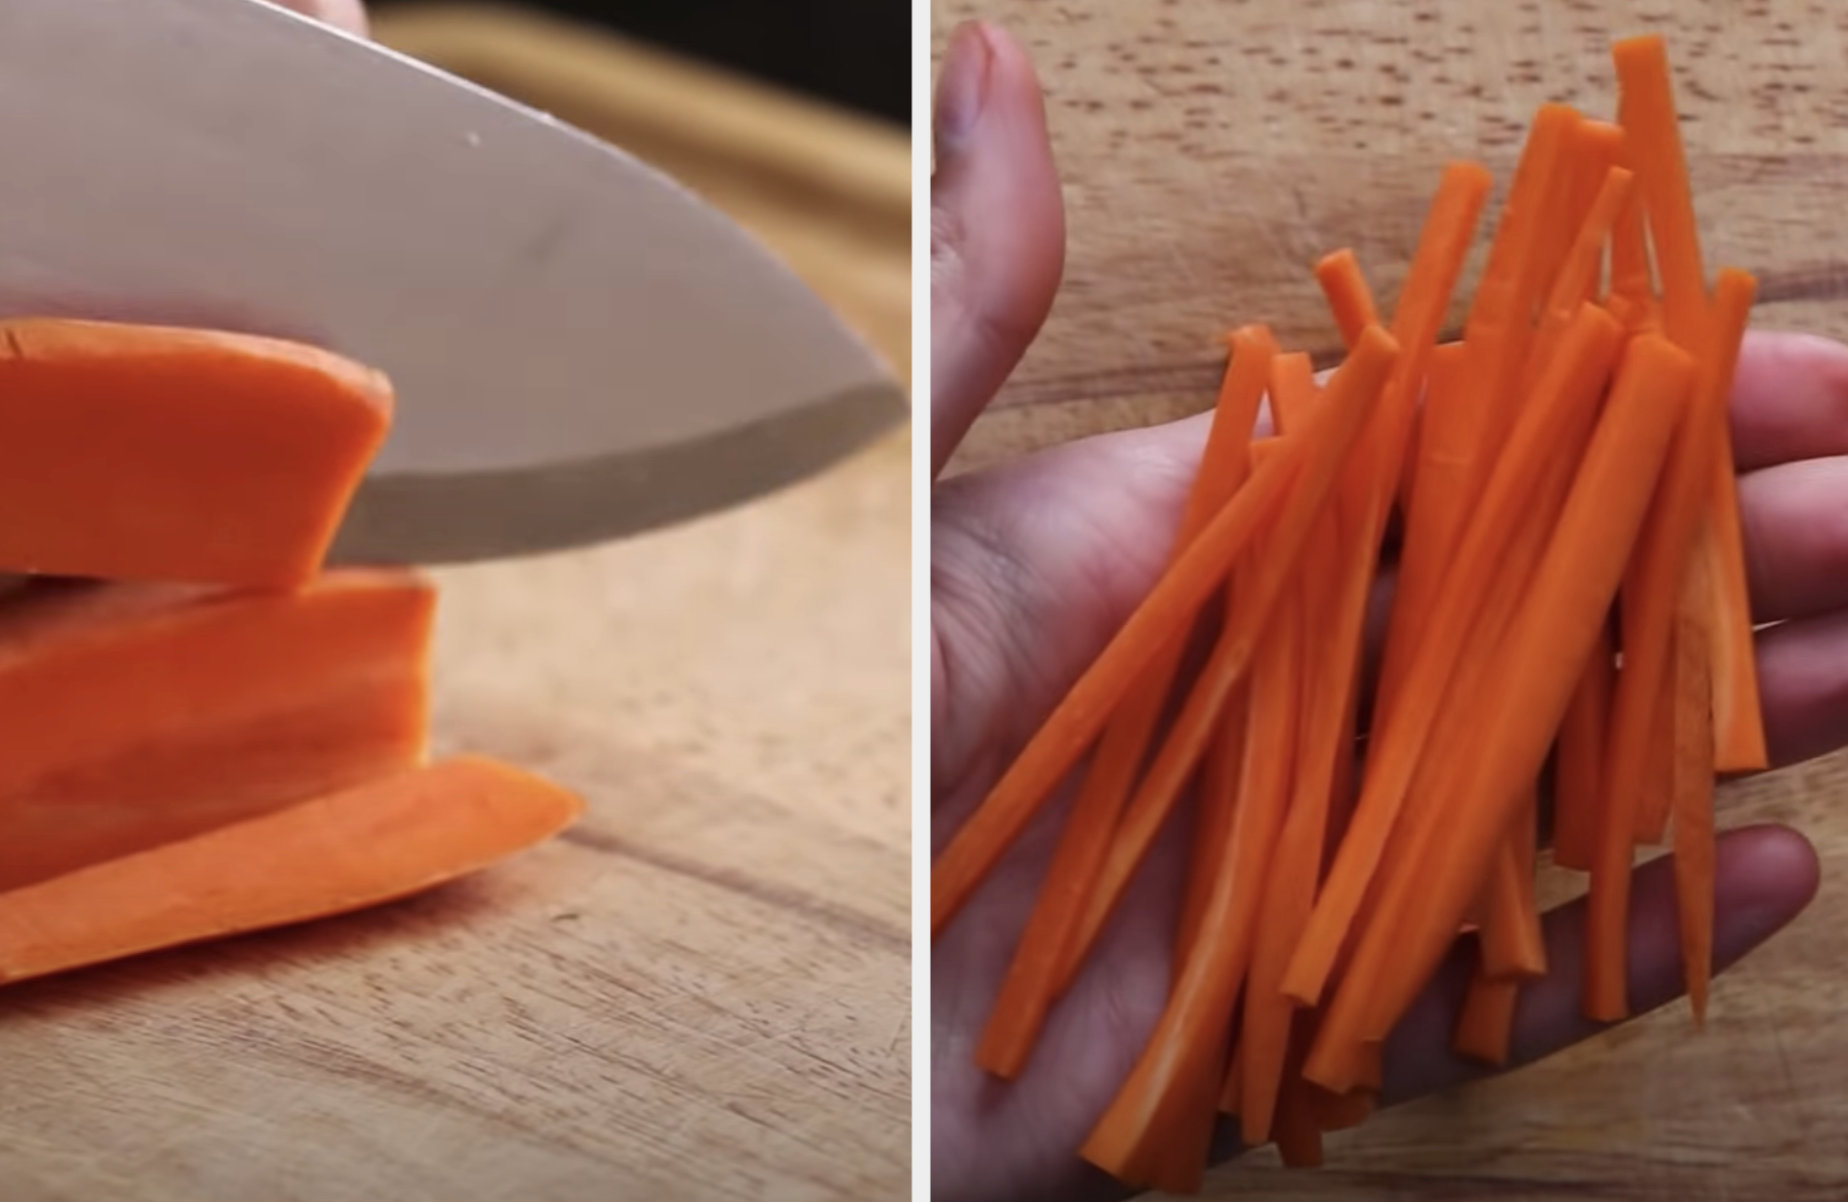 A sharp knife slicing through carrots